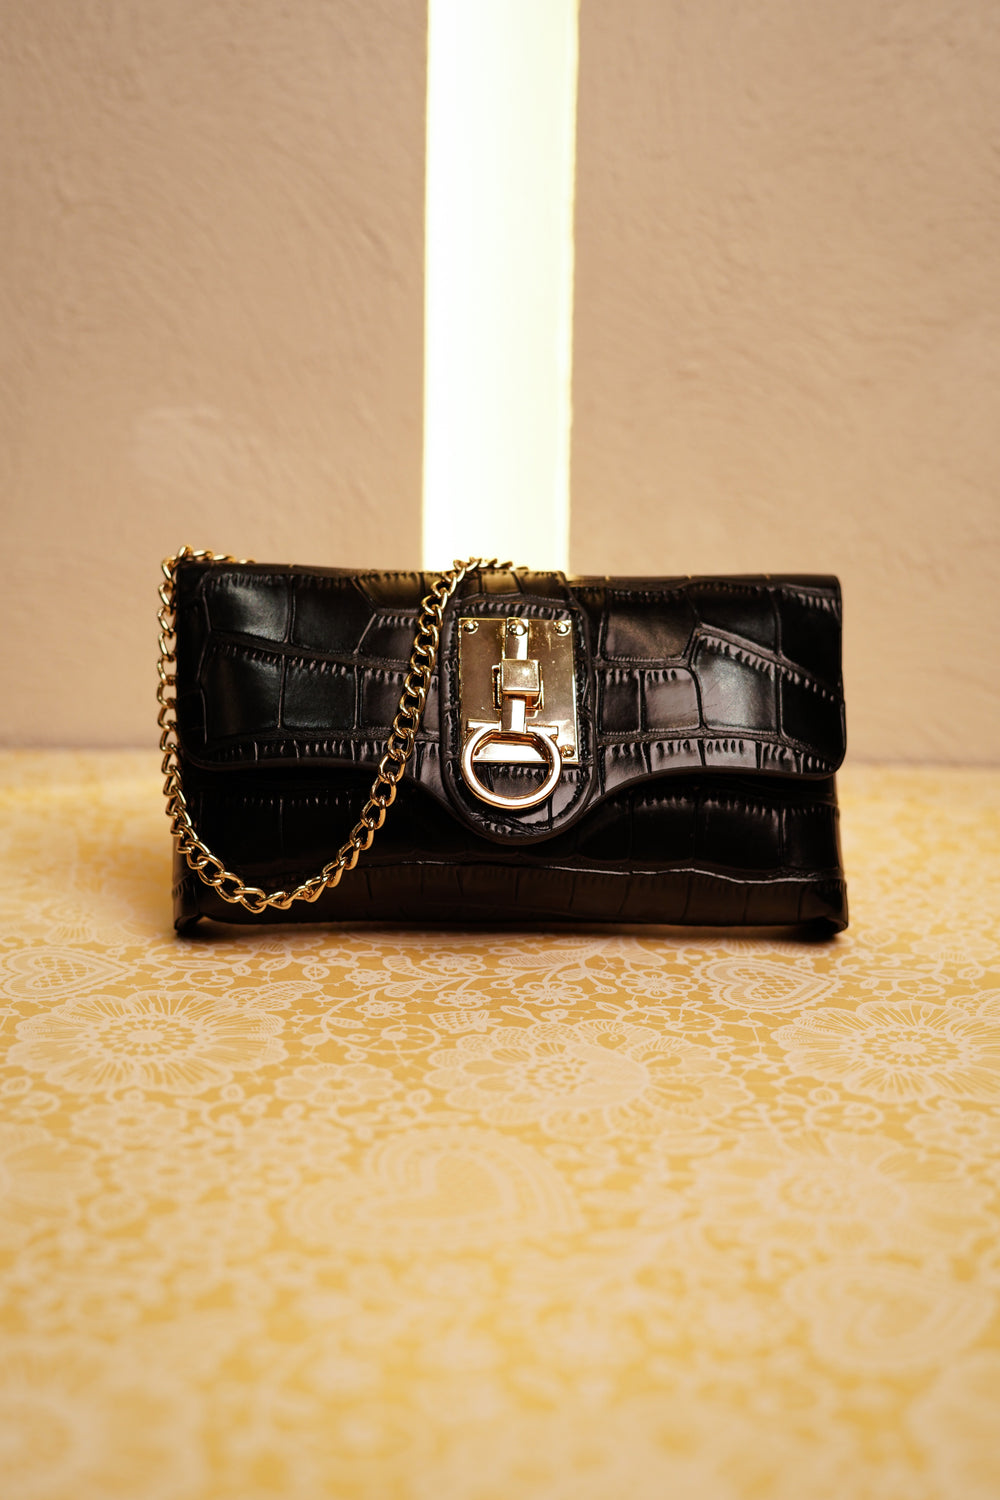 Fashionably Styled Waist Belt Bag Featuring the Noir Trek Aesthetic